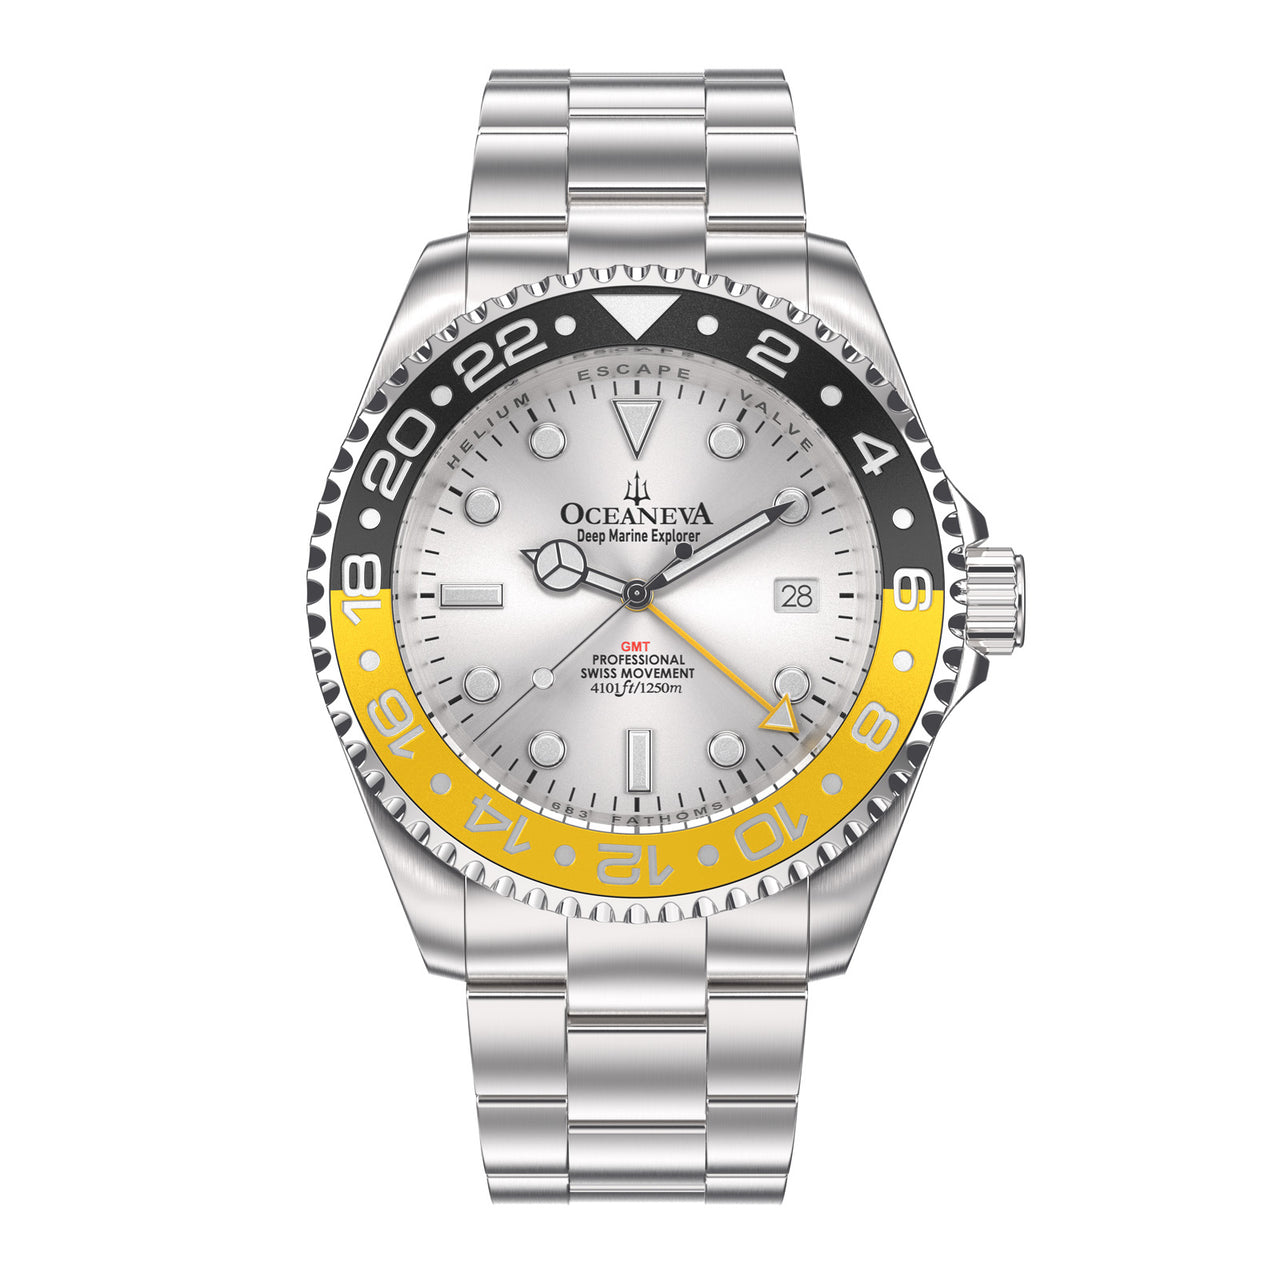 Oceaneva™ Men's GMT Deep Marine Explorer 1250M Pro Diver Silver Dial Watch Yellow and Black